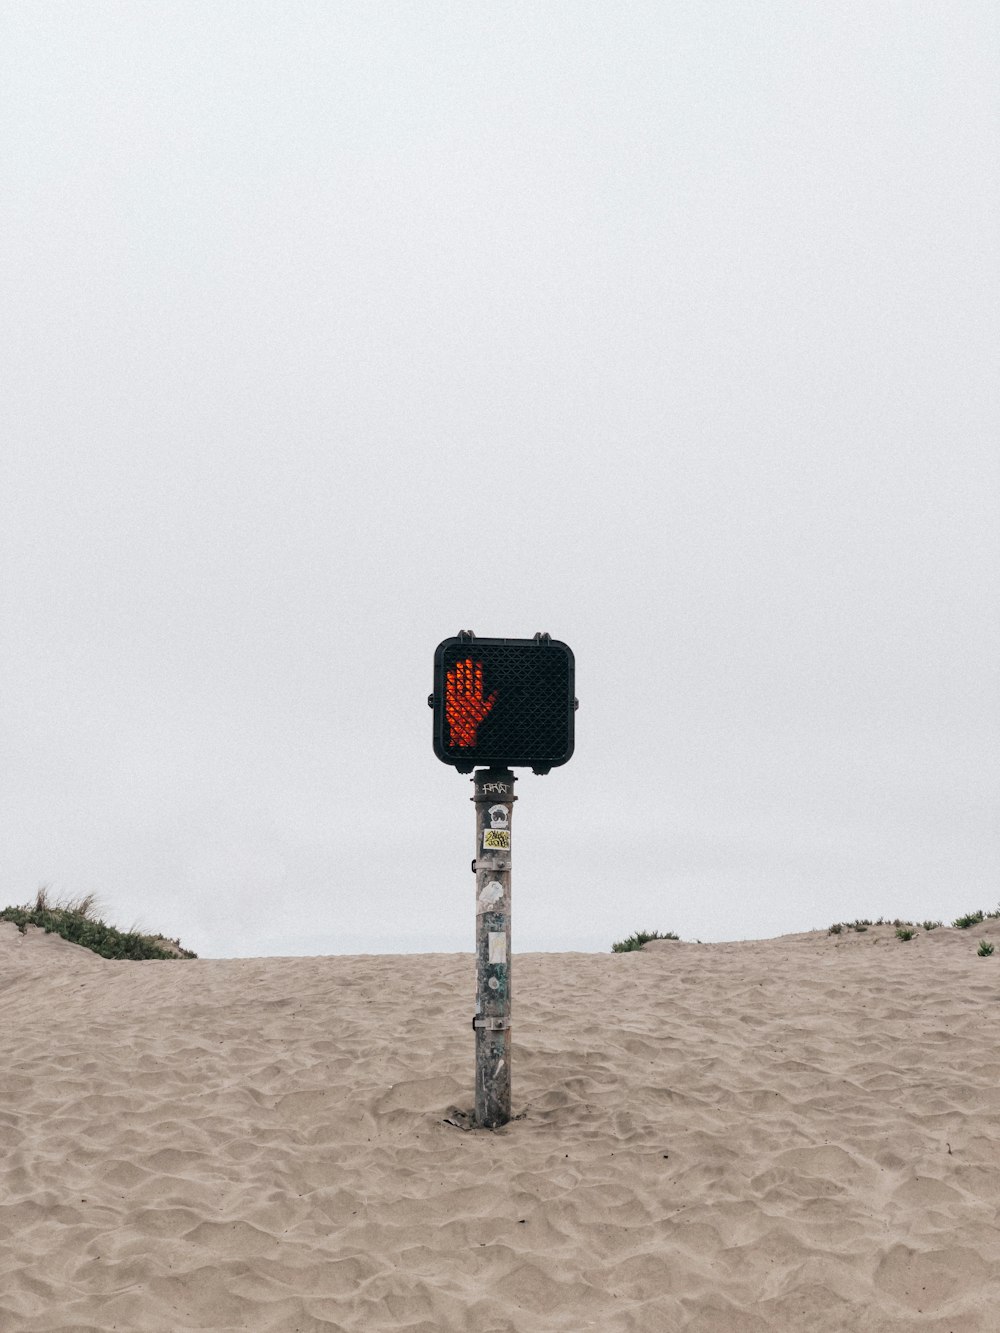 a traffic light sitting on top of a sandy beach